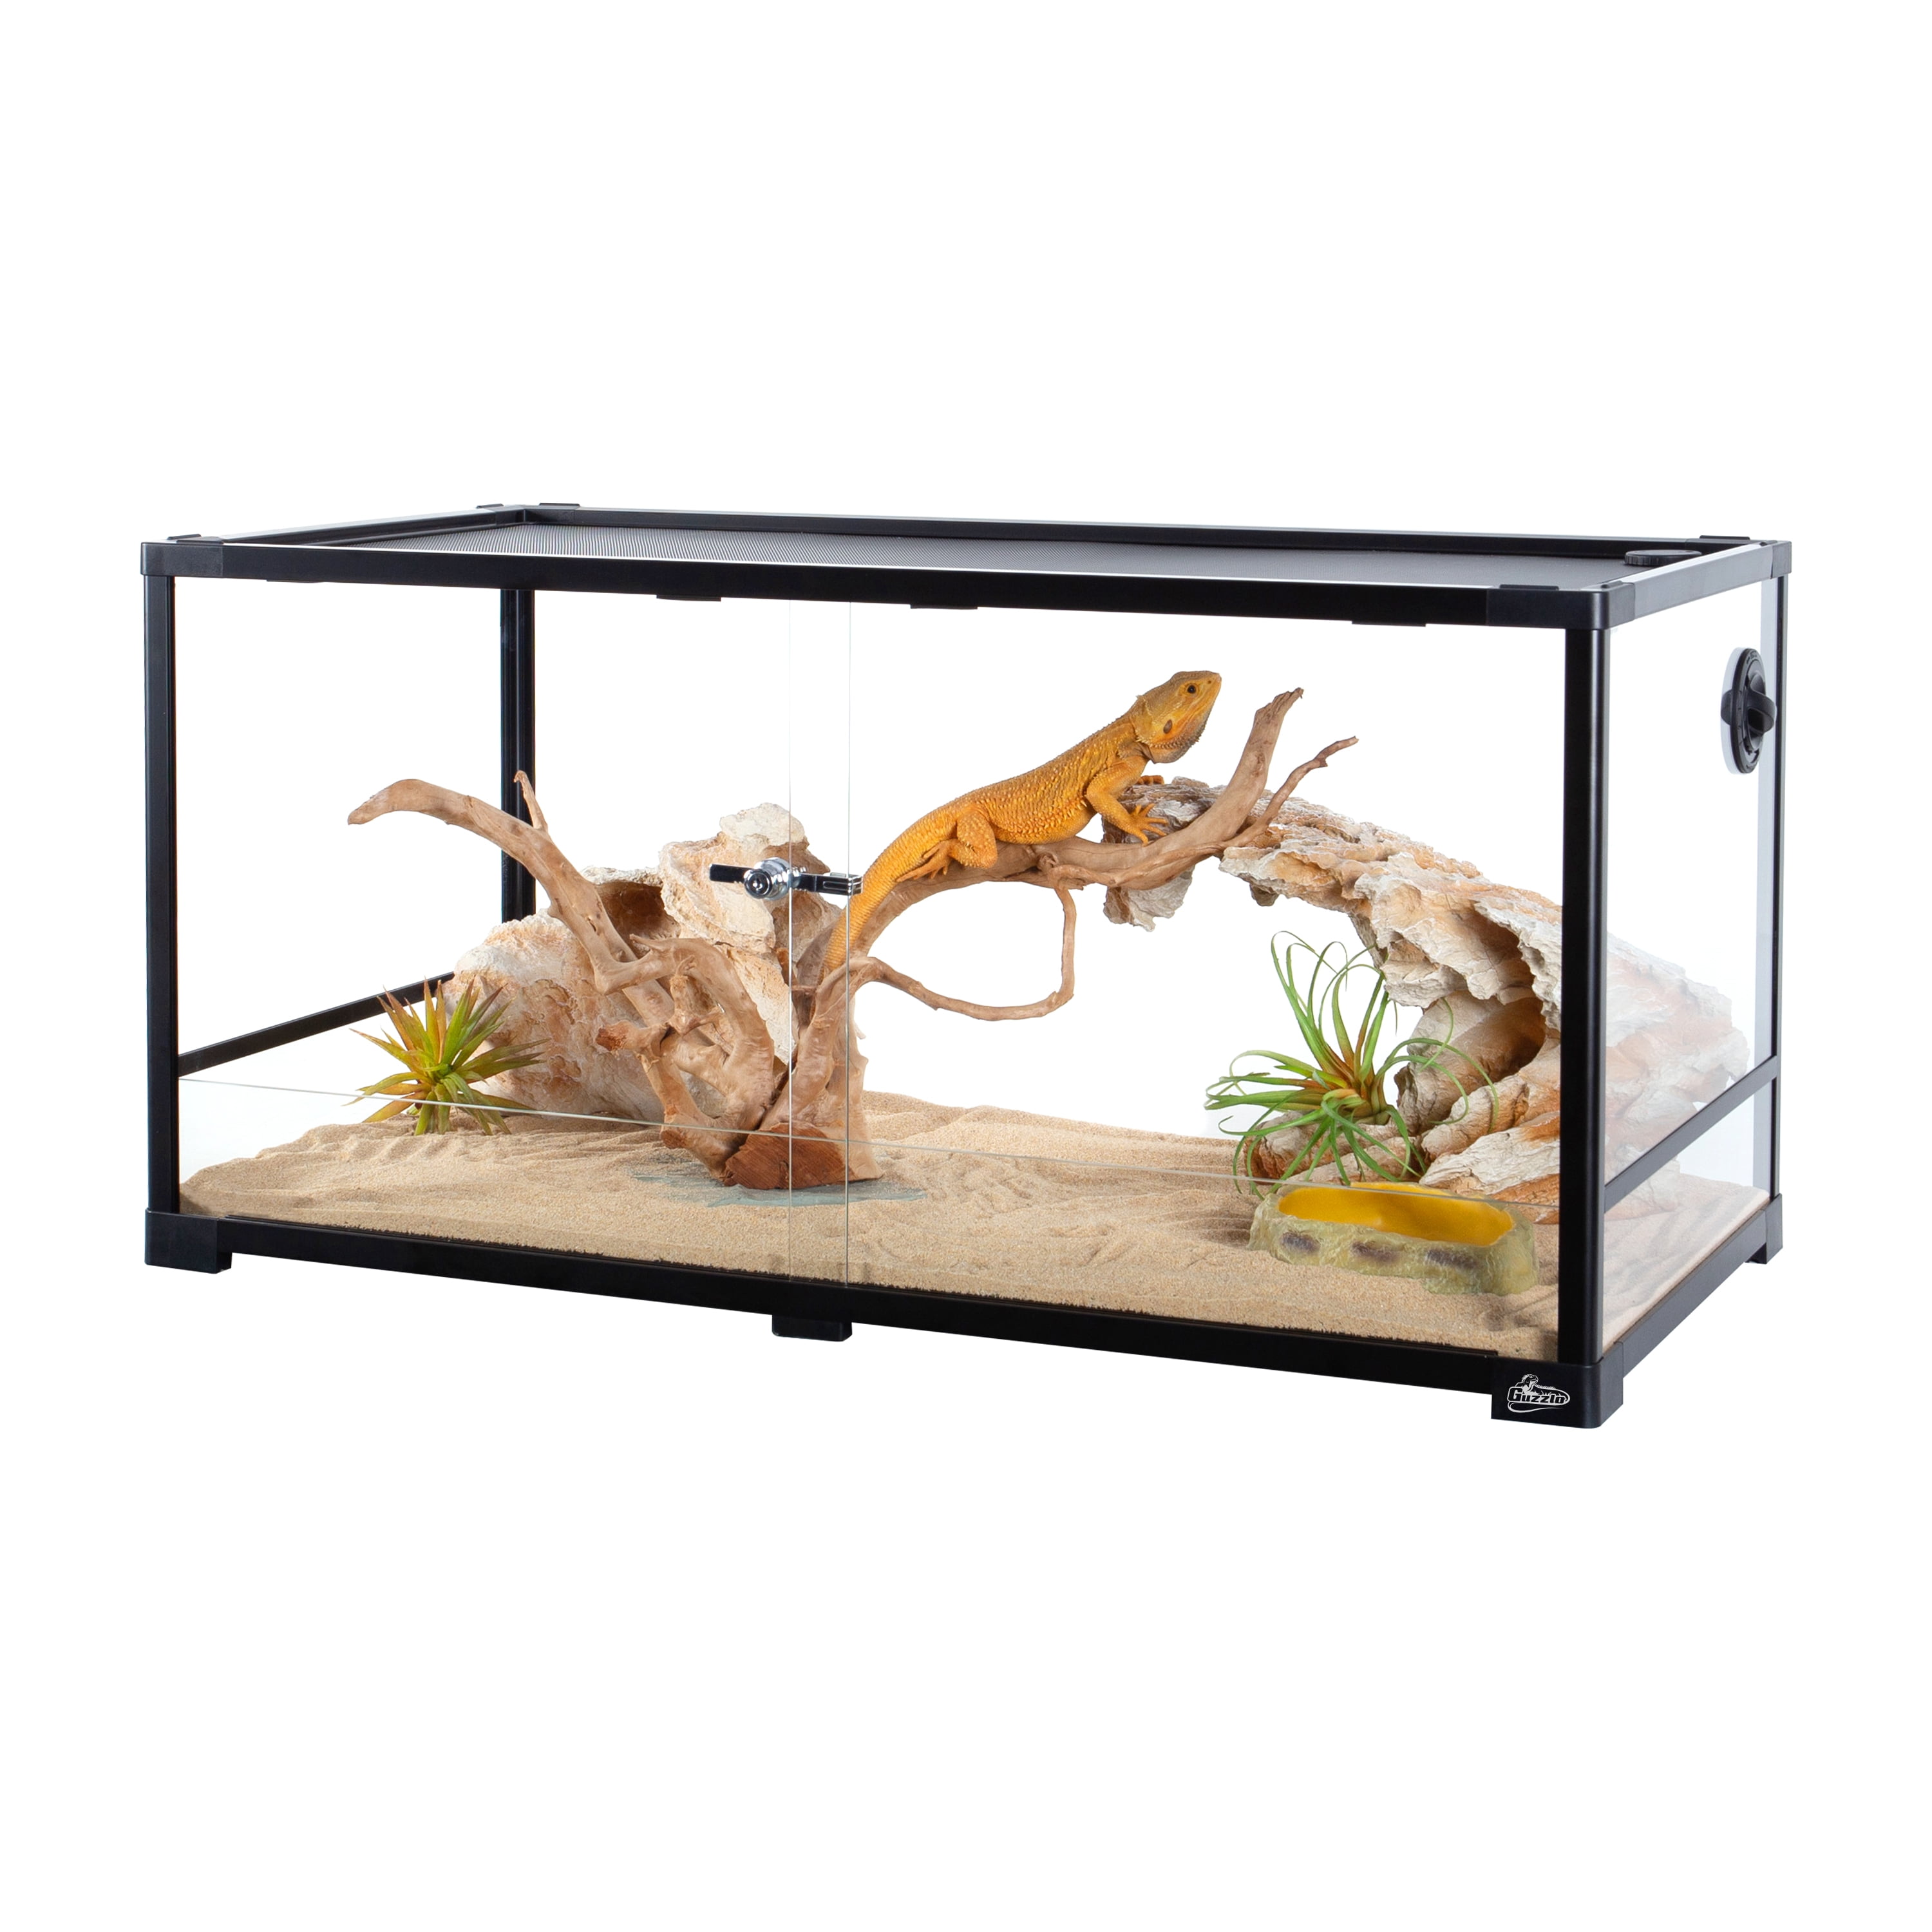 GUZZLO Reptile Glass Tank -36 x 18 x 18 Inches Knock Down Full View ...